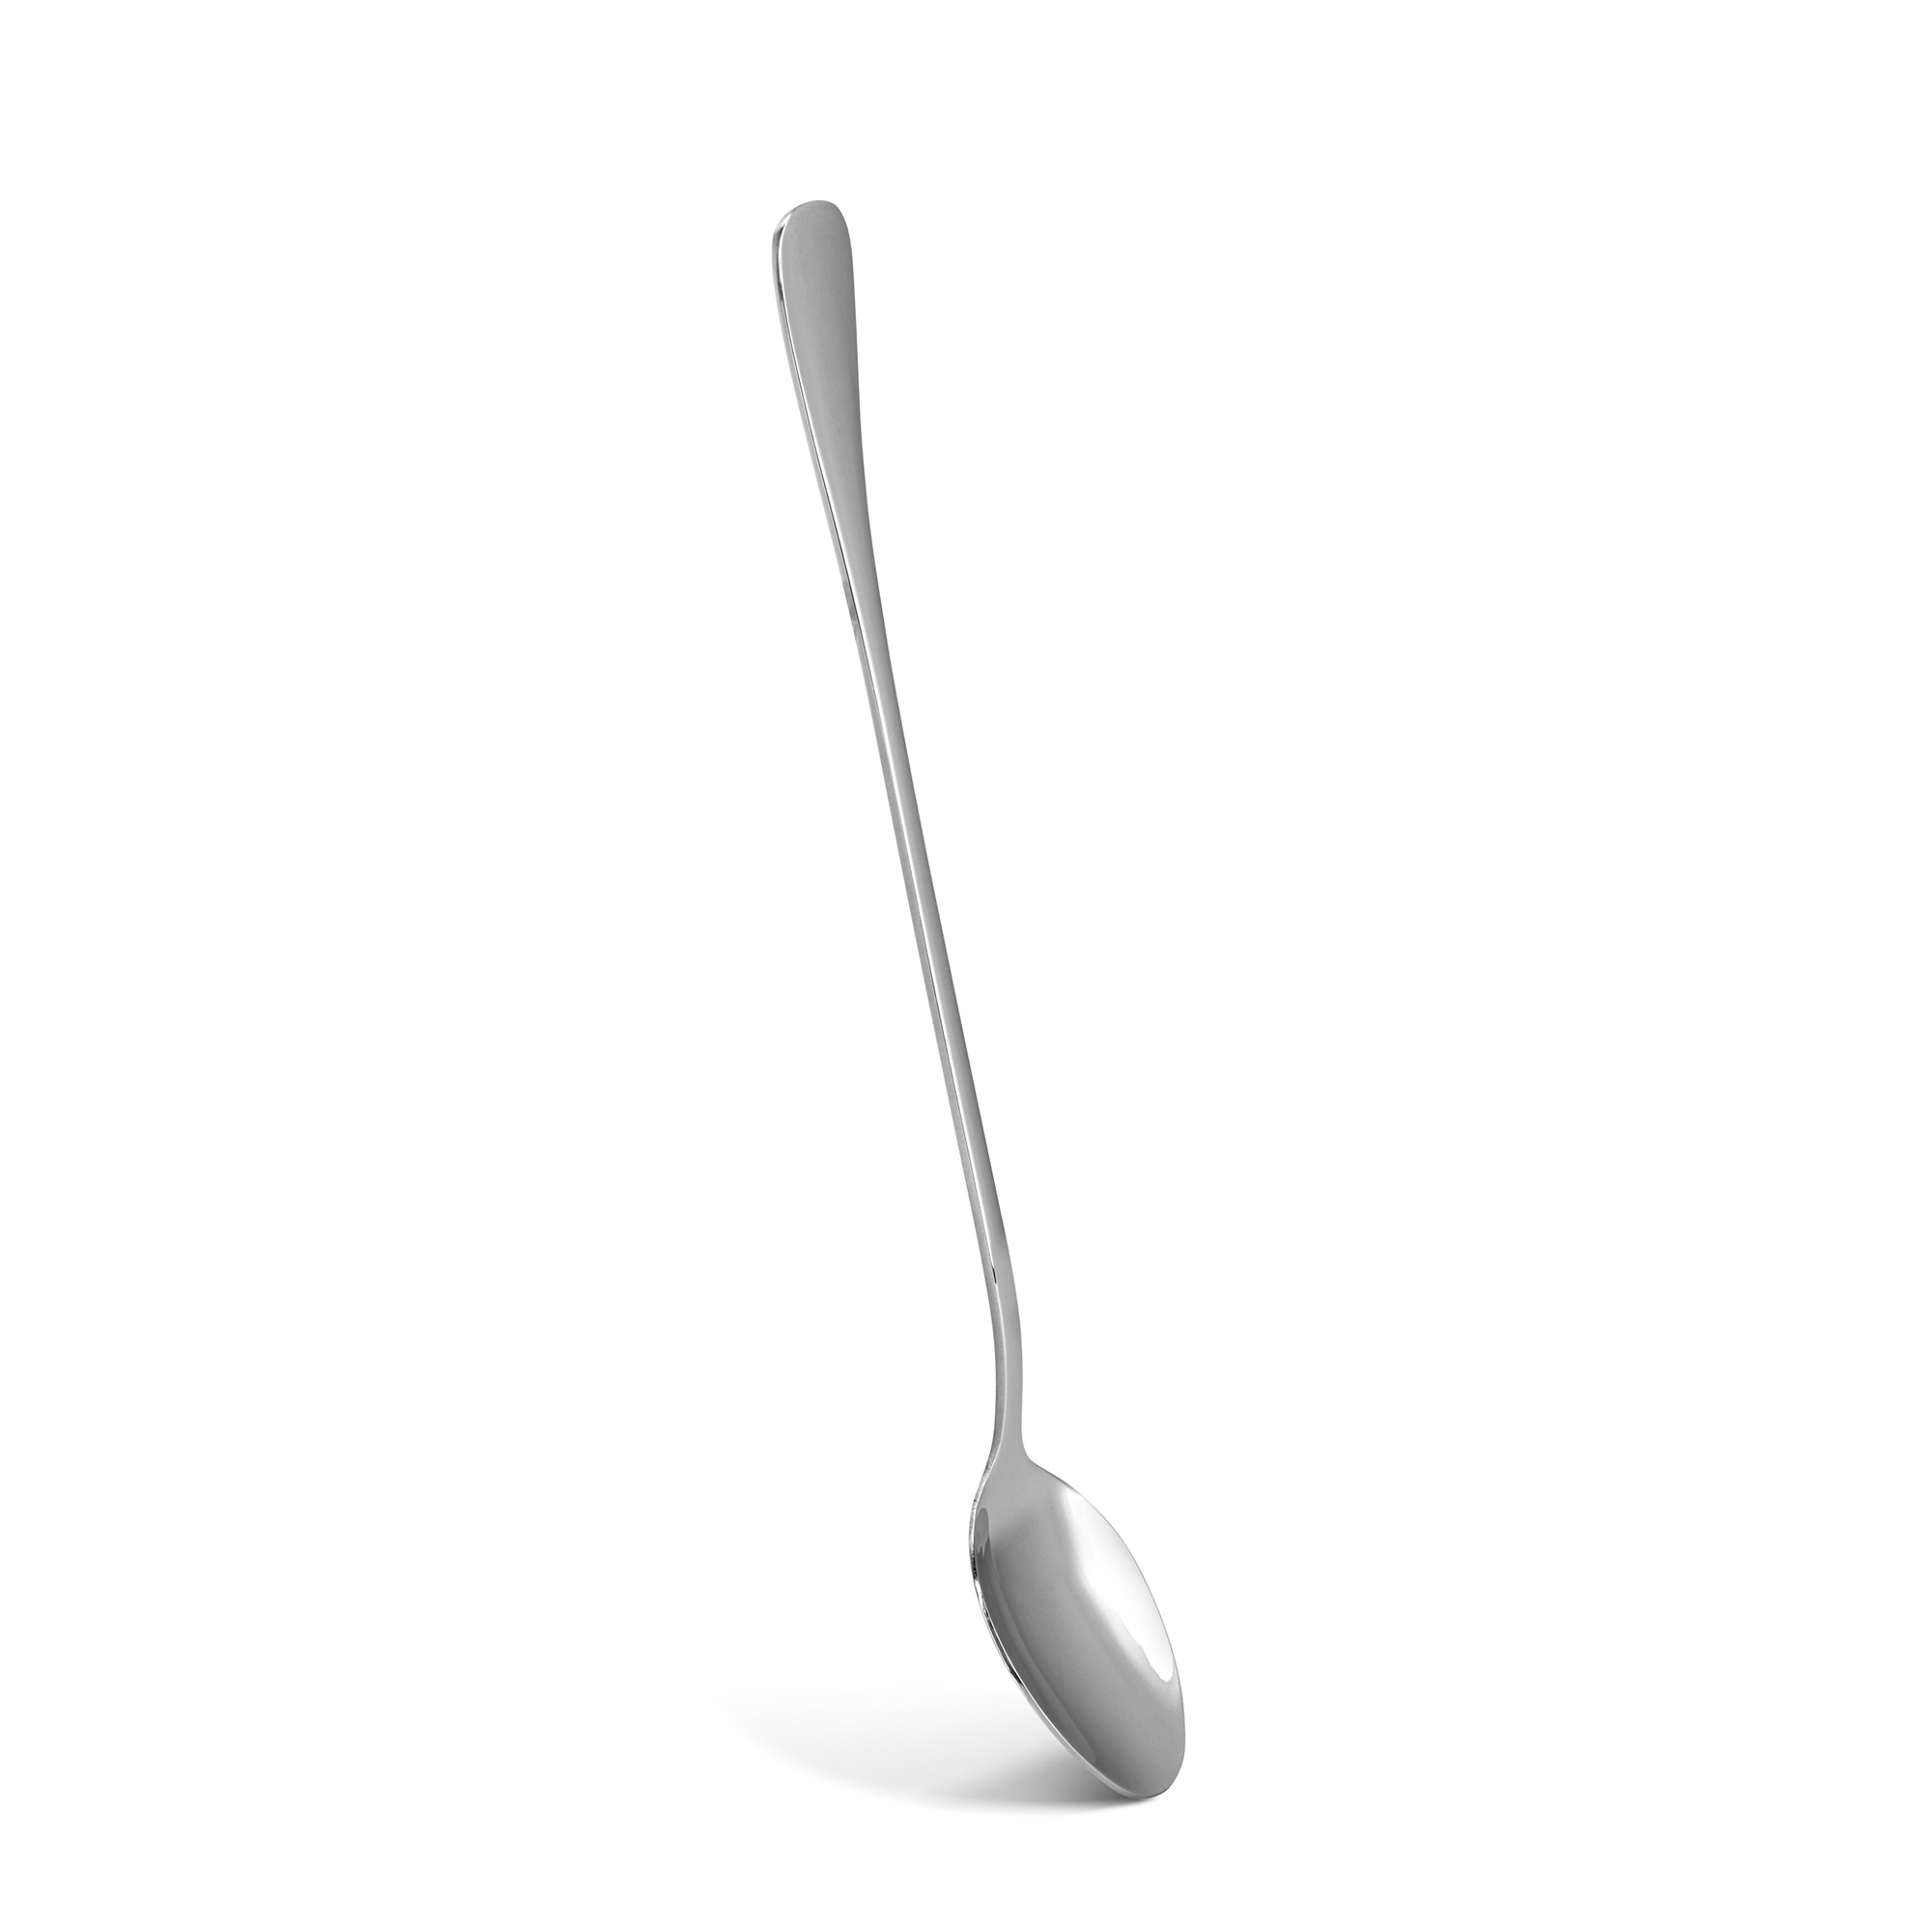 Spoon with long handle FLAVIA 20 cm